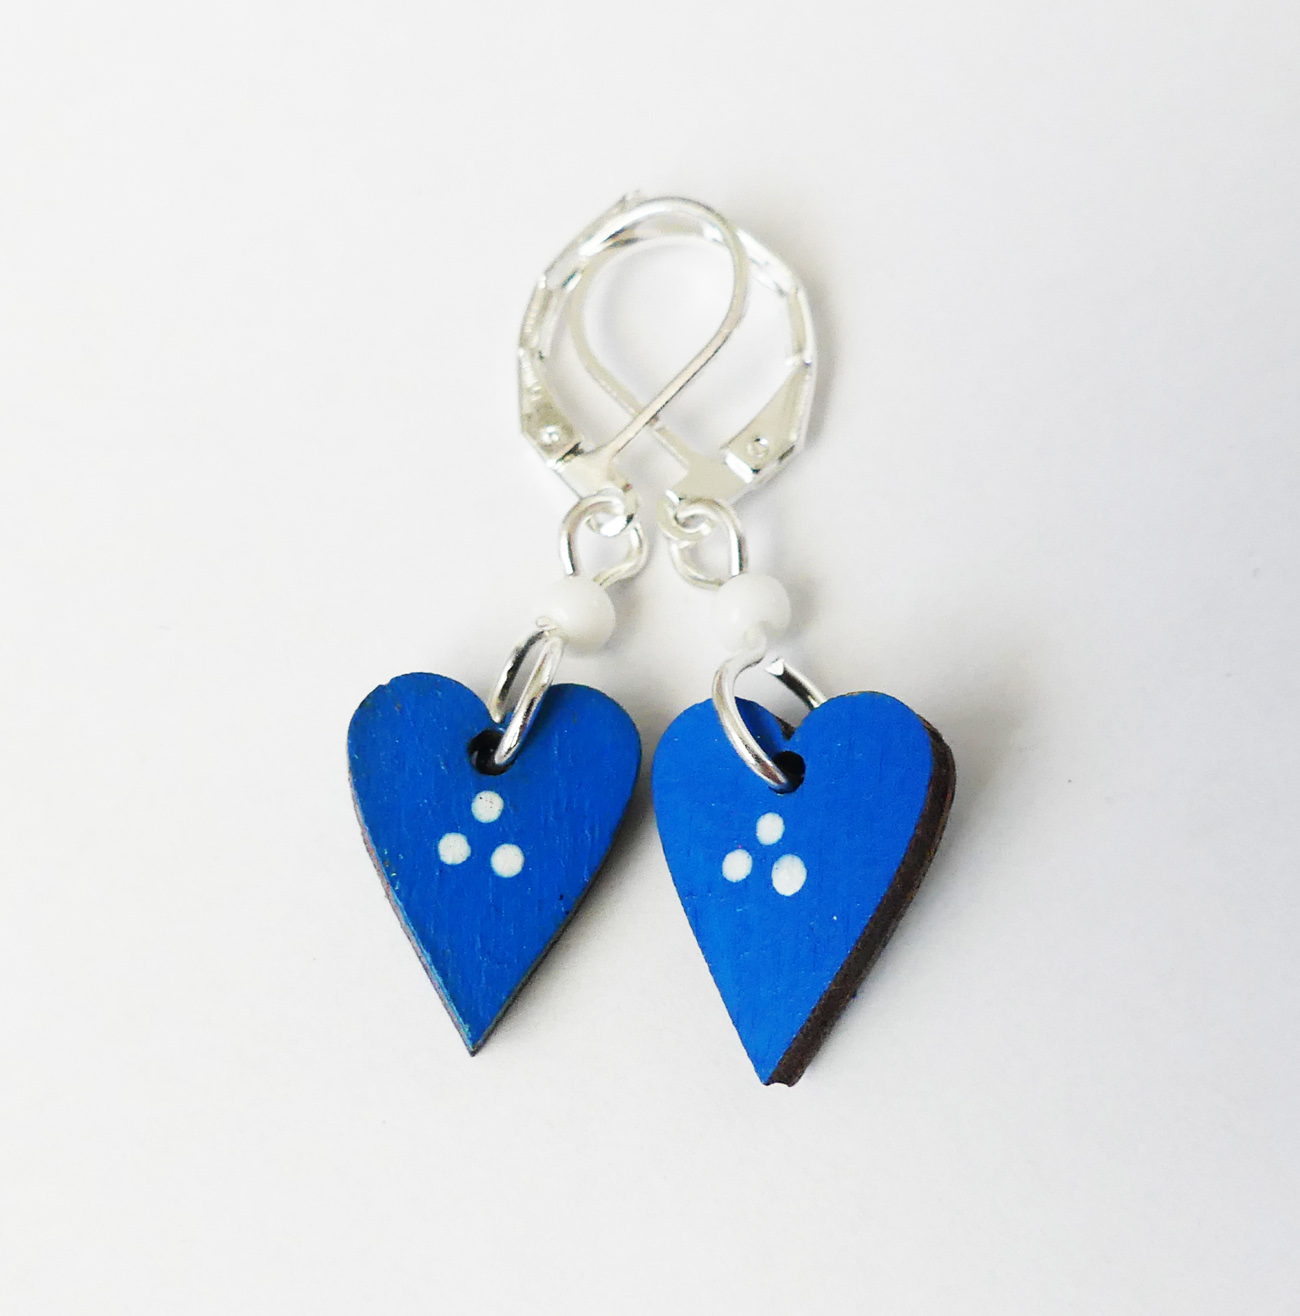 Modré srdcové náušnice z dreva s bielymi bodkami a uzatvárateľnými háčikmi